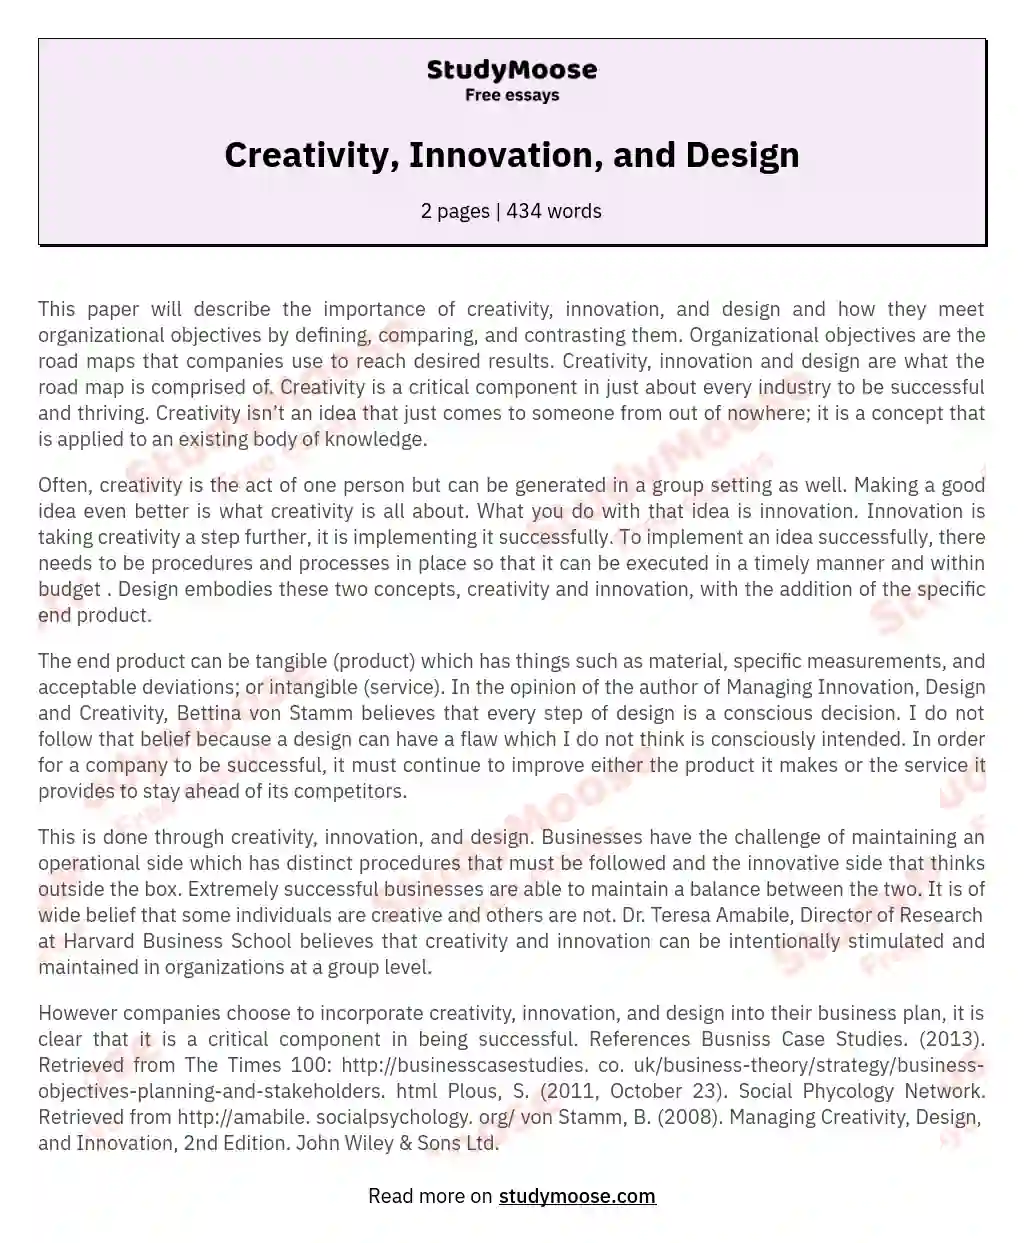 Creativity, Innovation, and Design essay